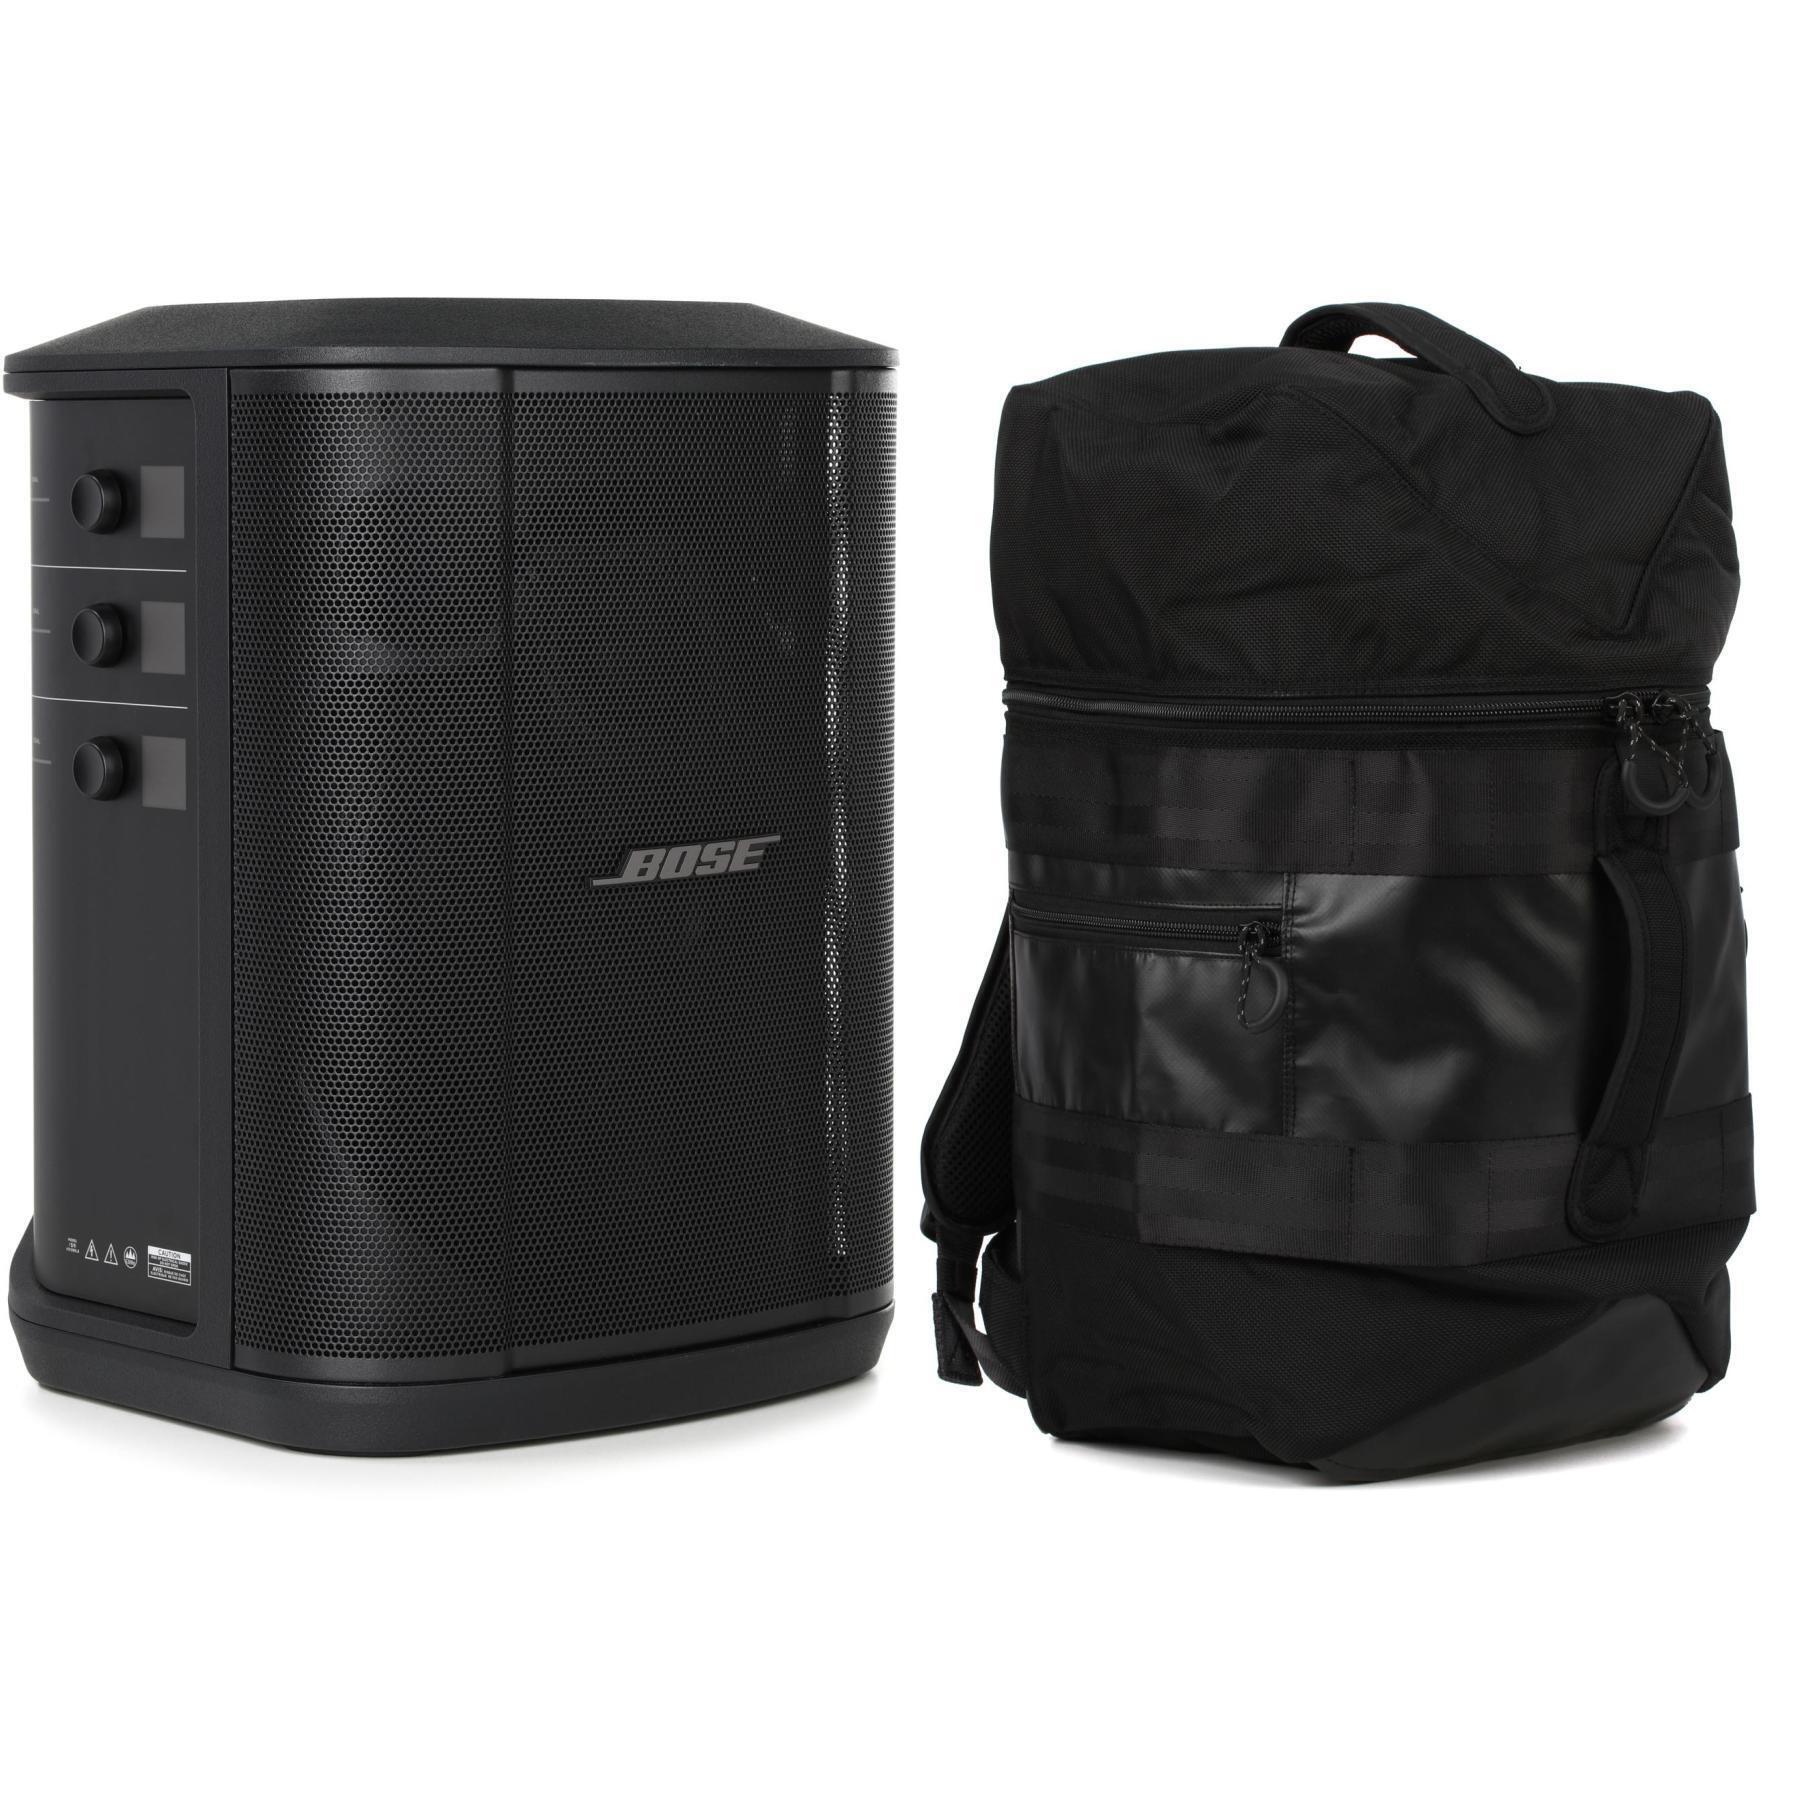 Bose S1 Pro + plus Speaker System Backpack - Black personalized logos